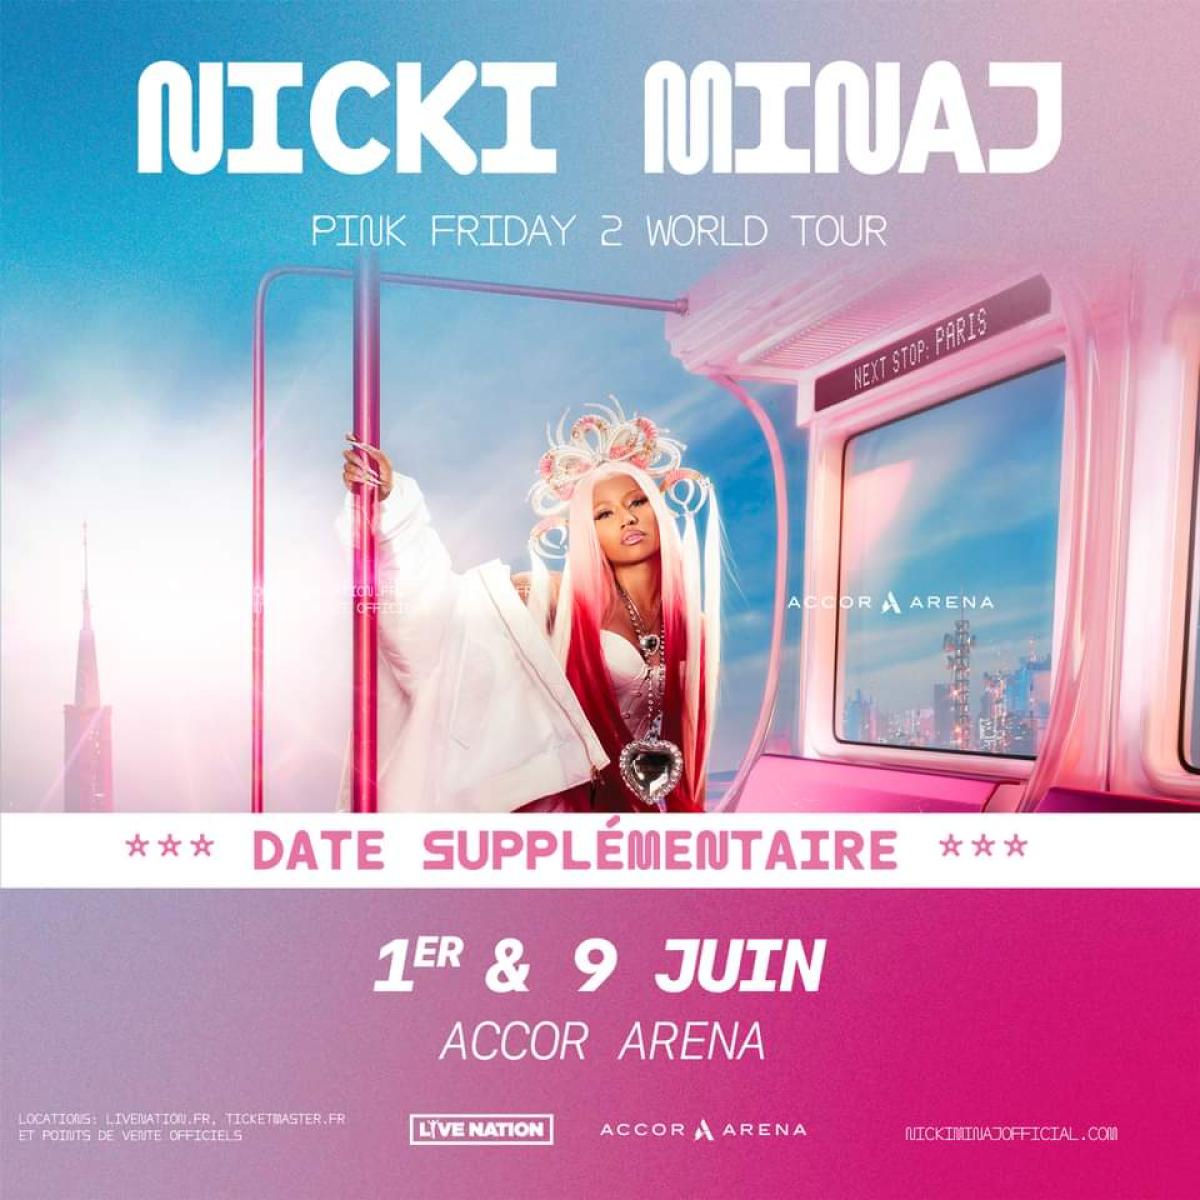 Nicki Minaj in der Accor Arena Tickets